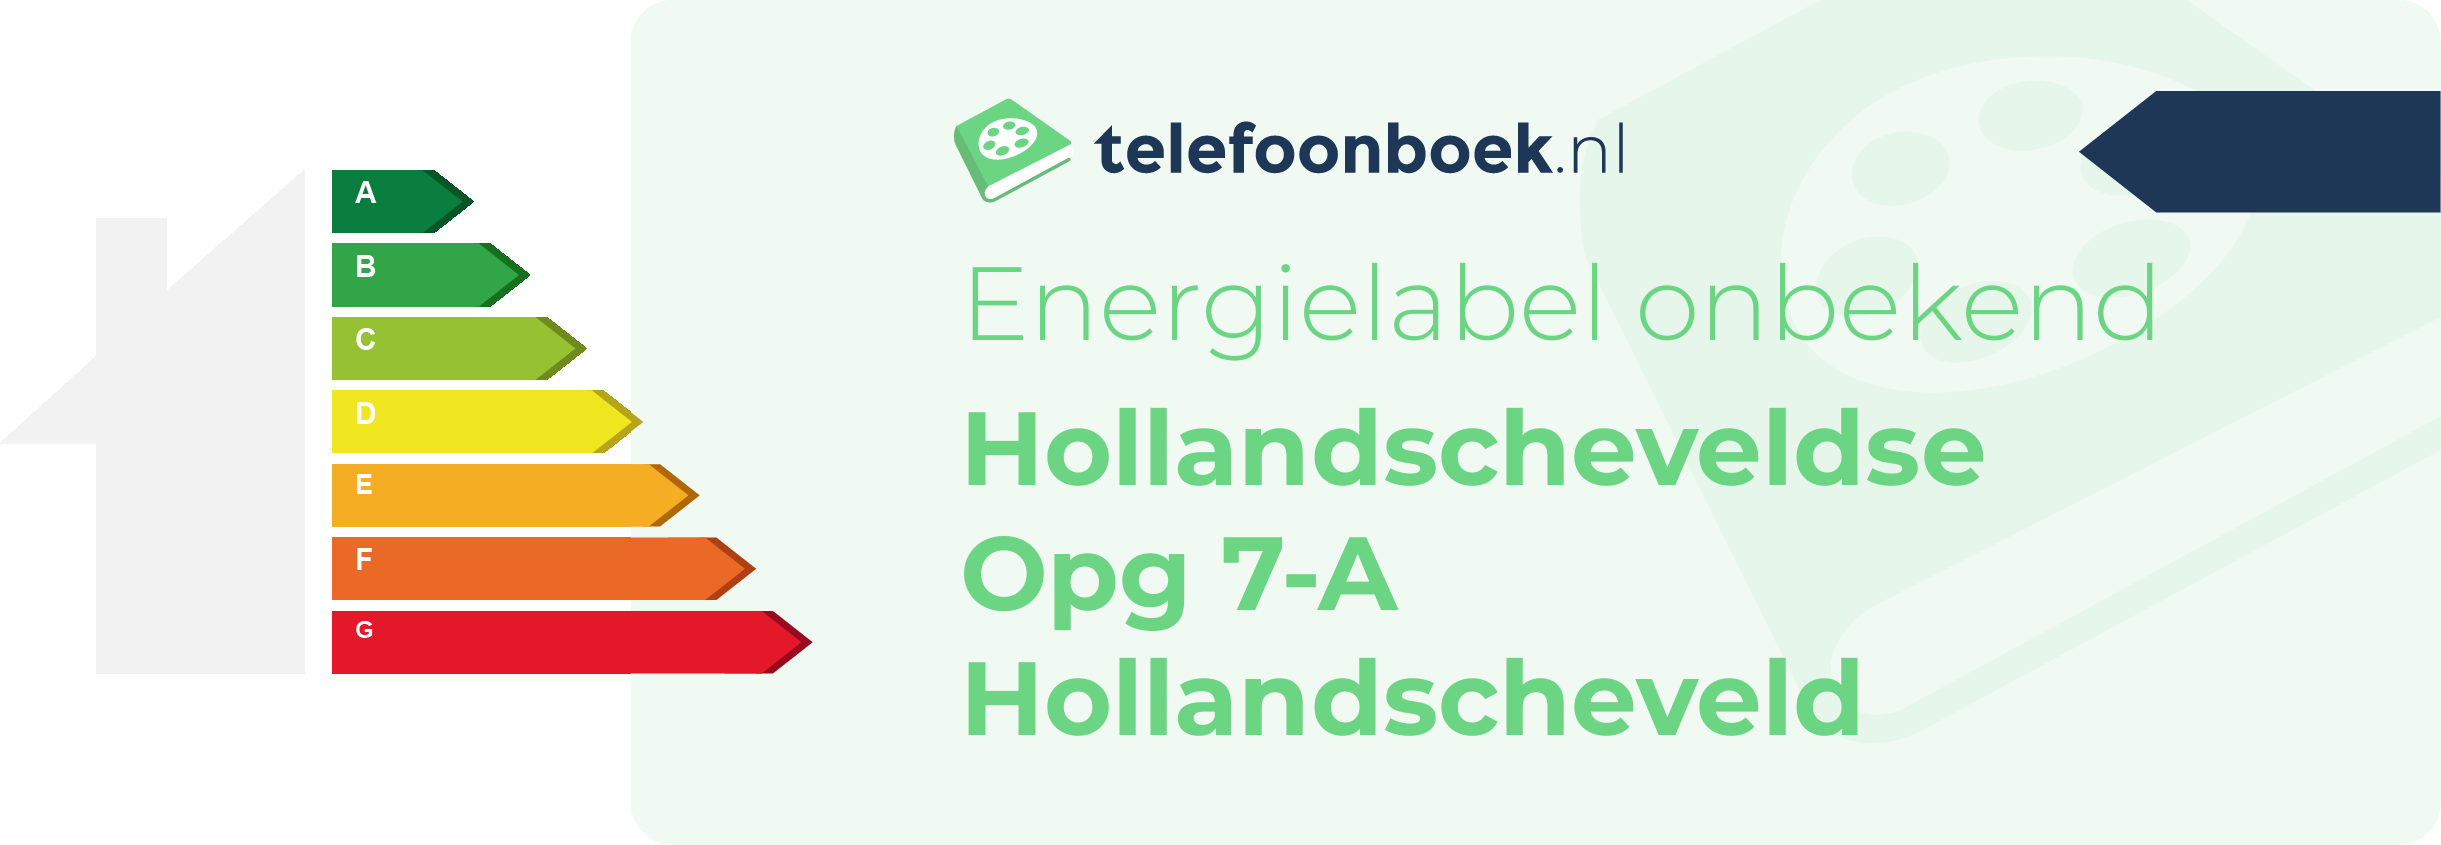 Energielabel Hollandscheveldse Opg 7-A Hollandscheveld